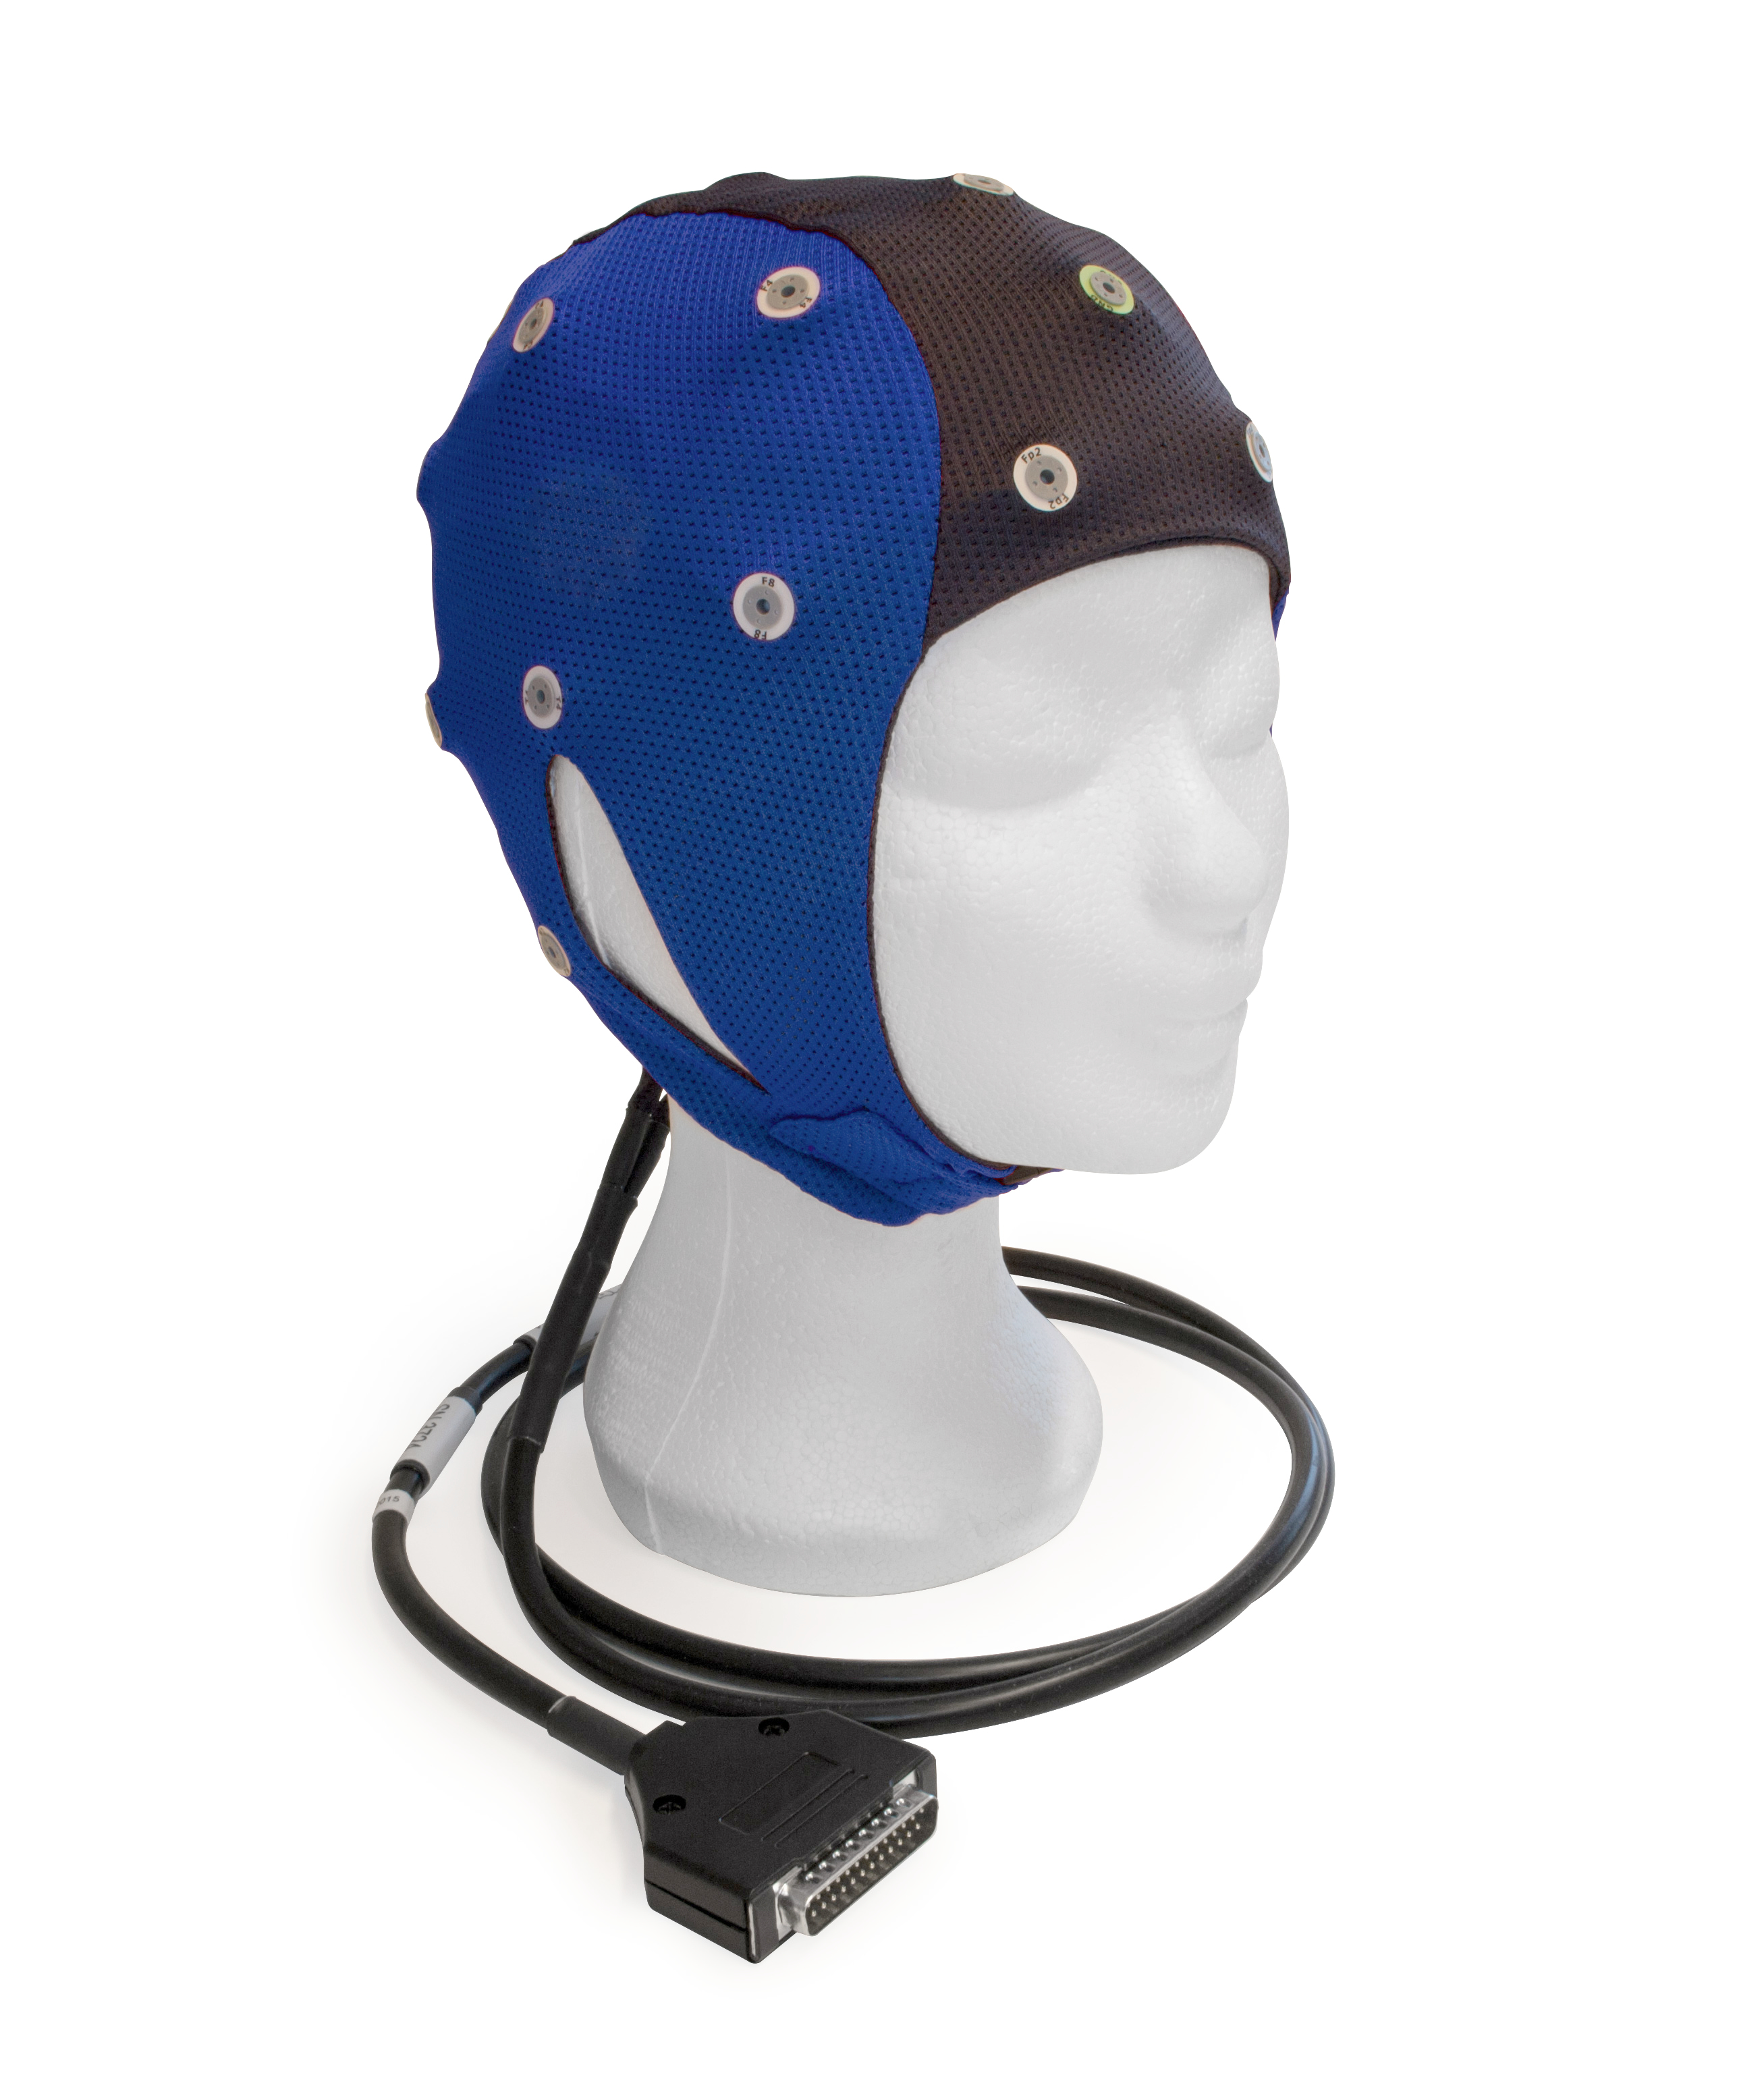 EEG Čepice ANT-Neuro waveguard connect: C 43 až 47 cm (modrá)